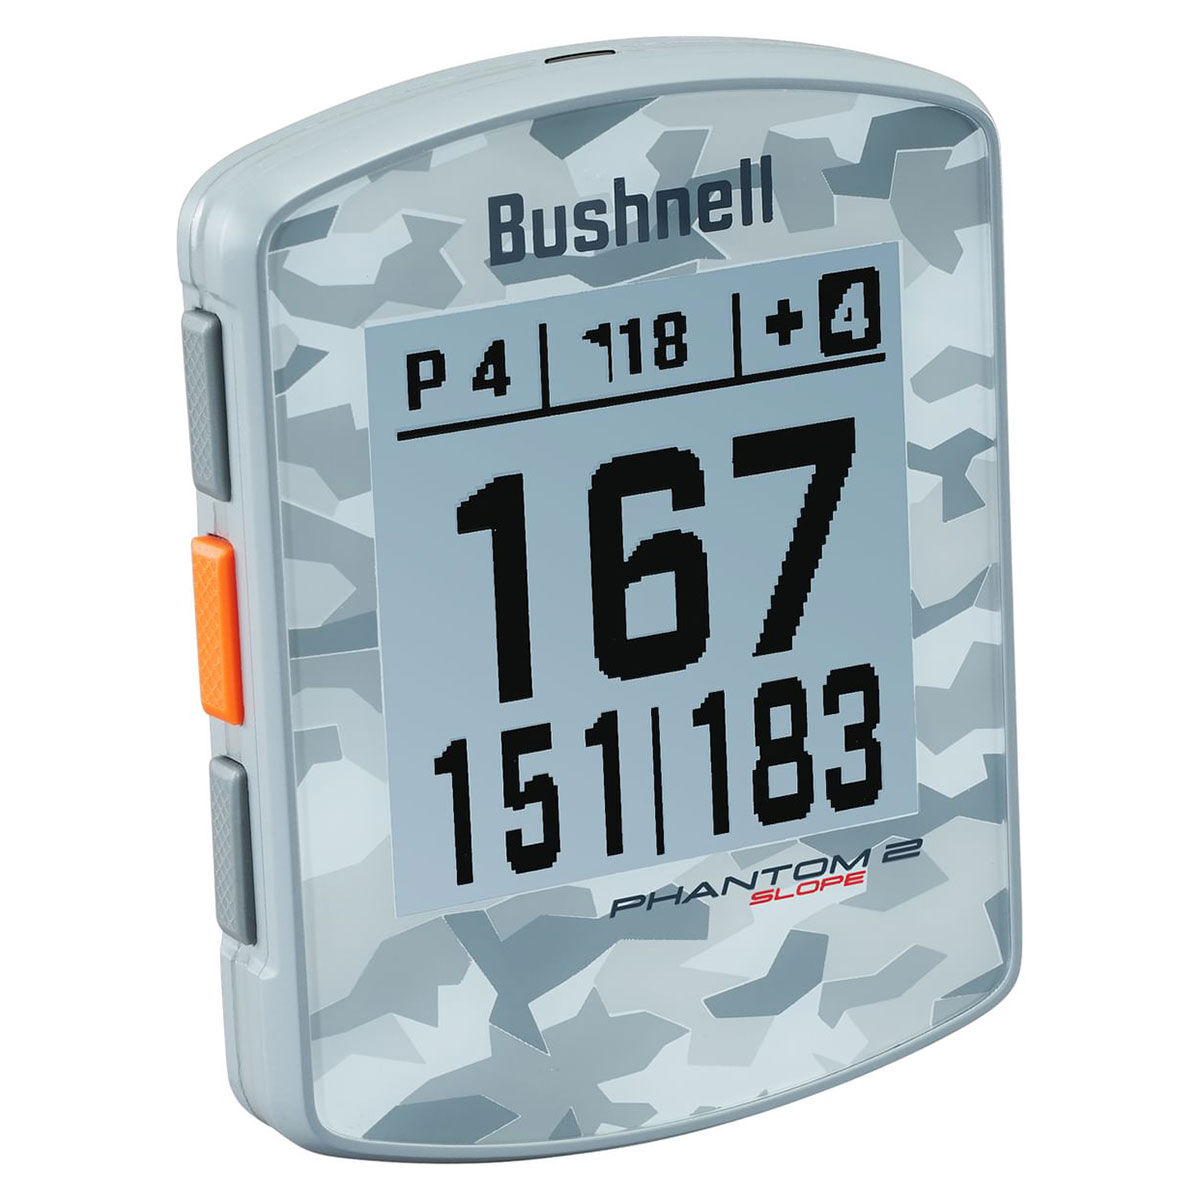 Bushnell Grey and White Camo Phantom 2 Slope Handheld Golf GPS | American Golf, One Size